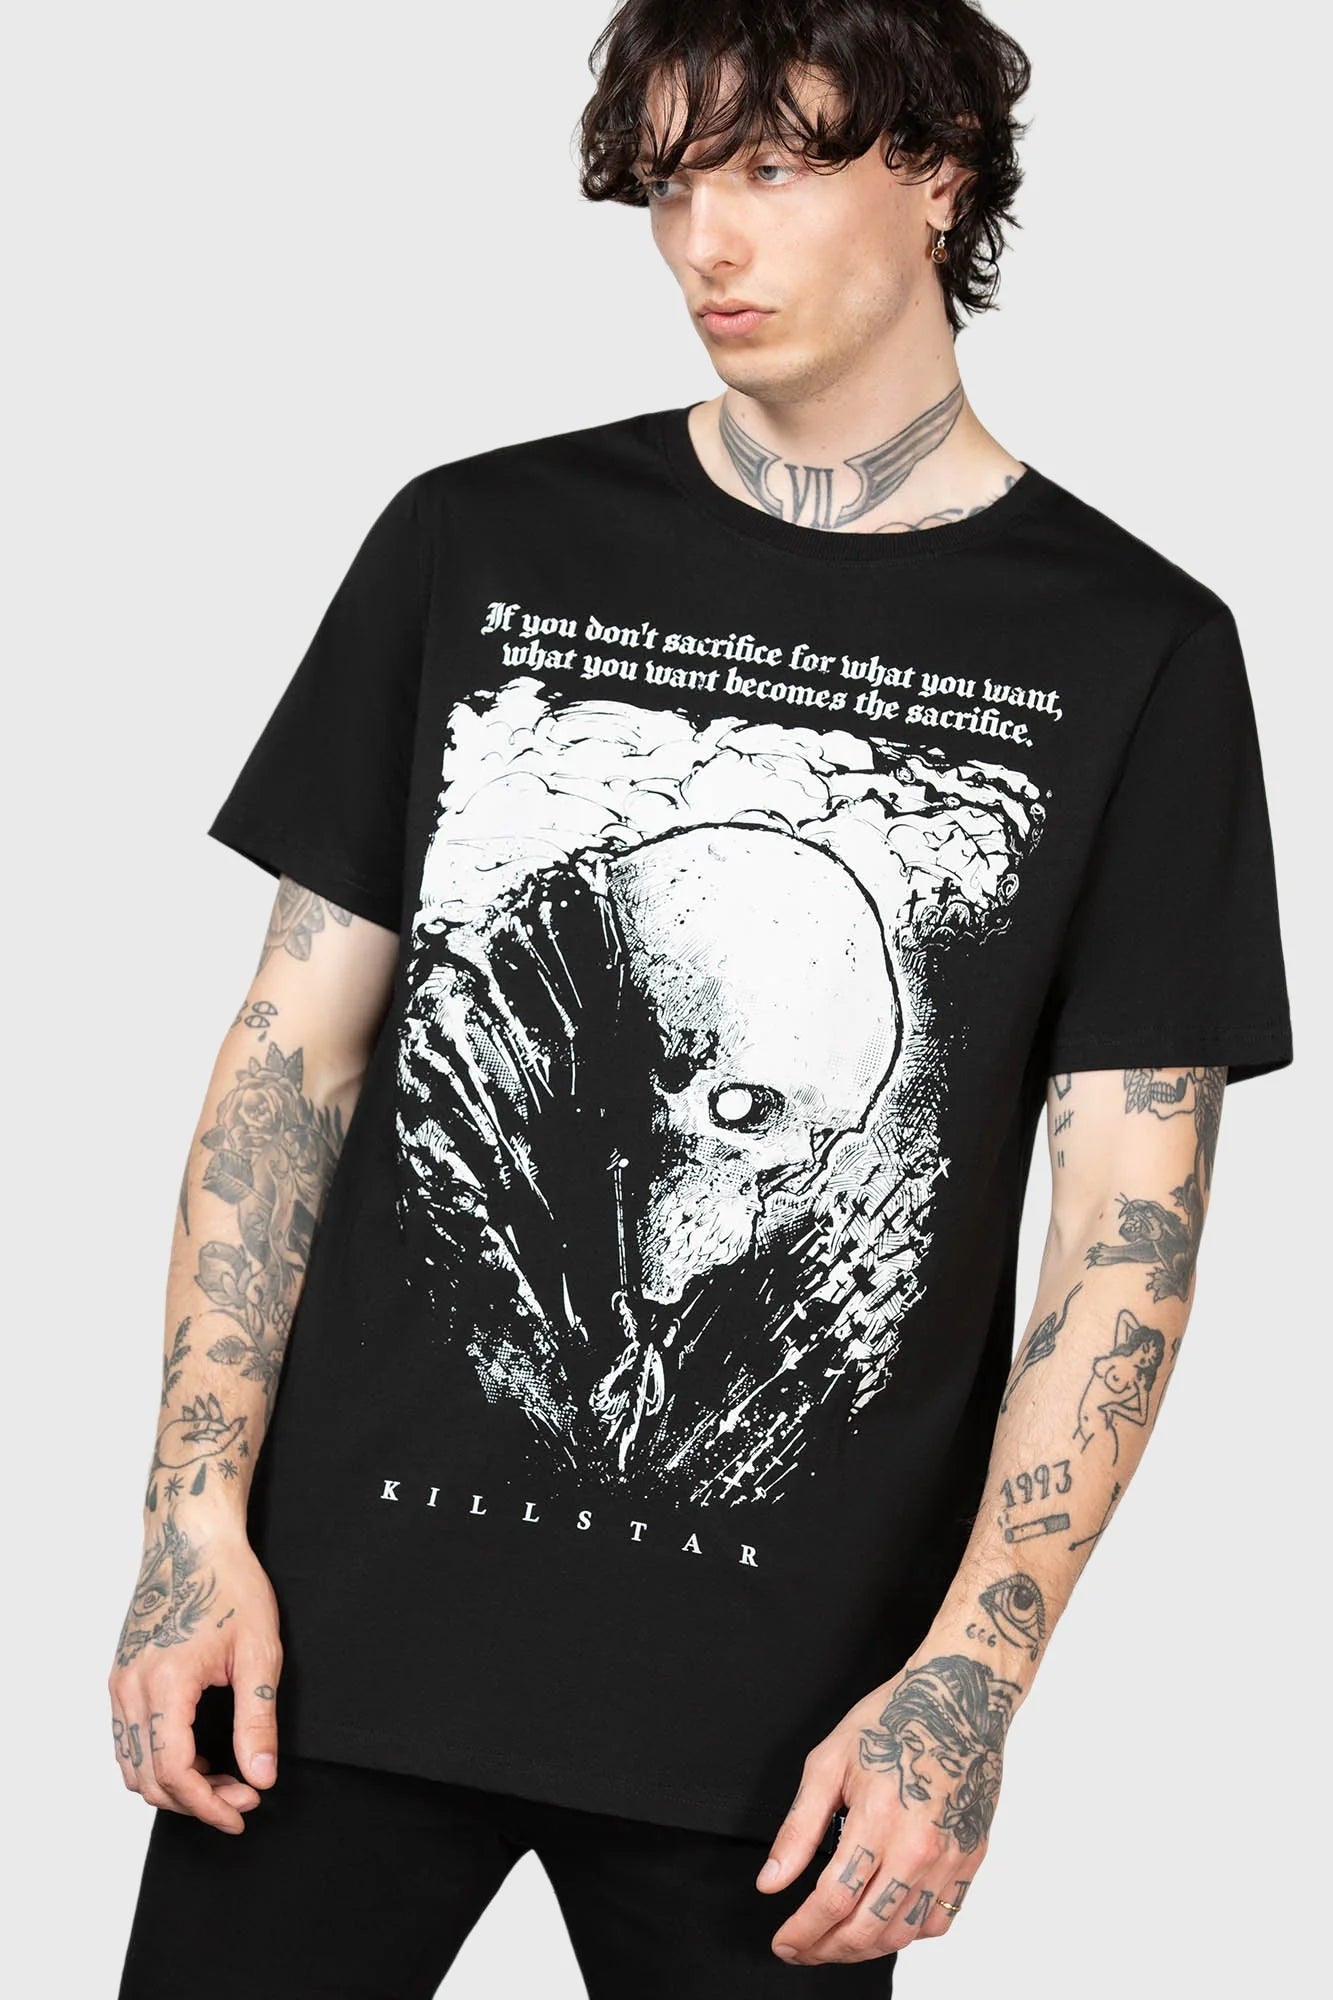 Schwarzes Killstar Shirt mit Totenkopf Print